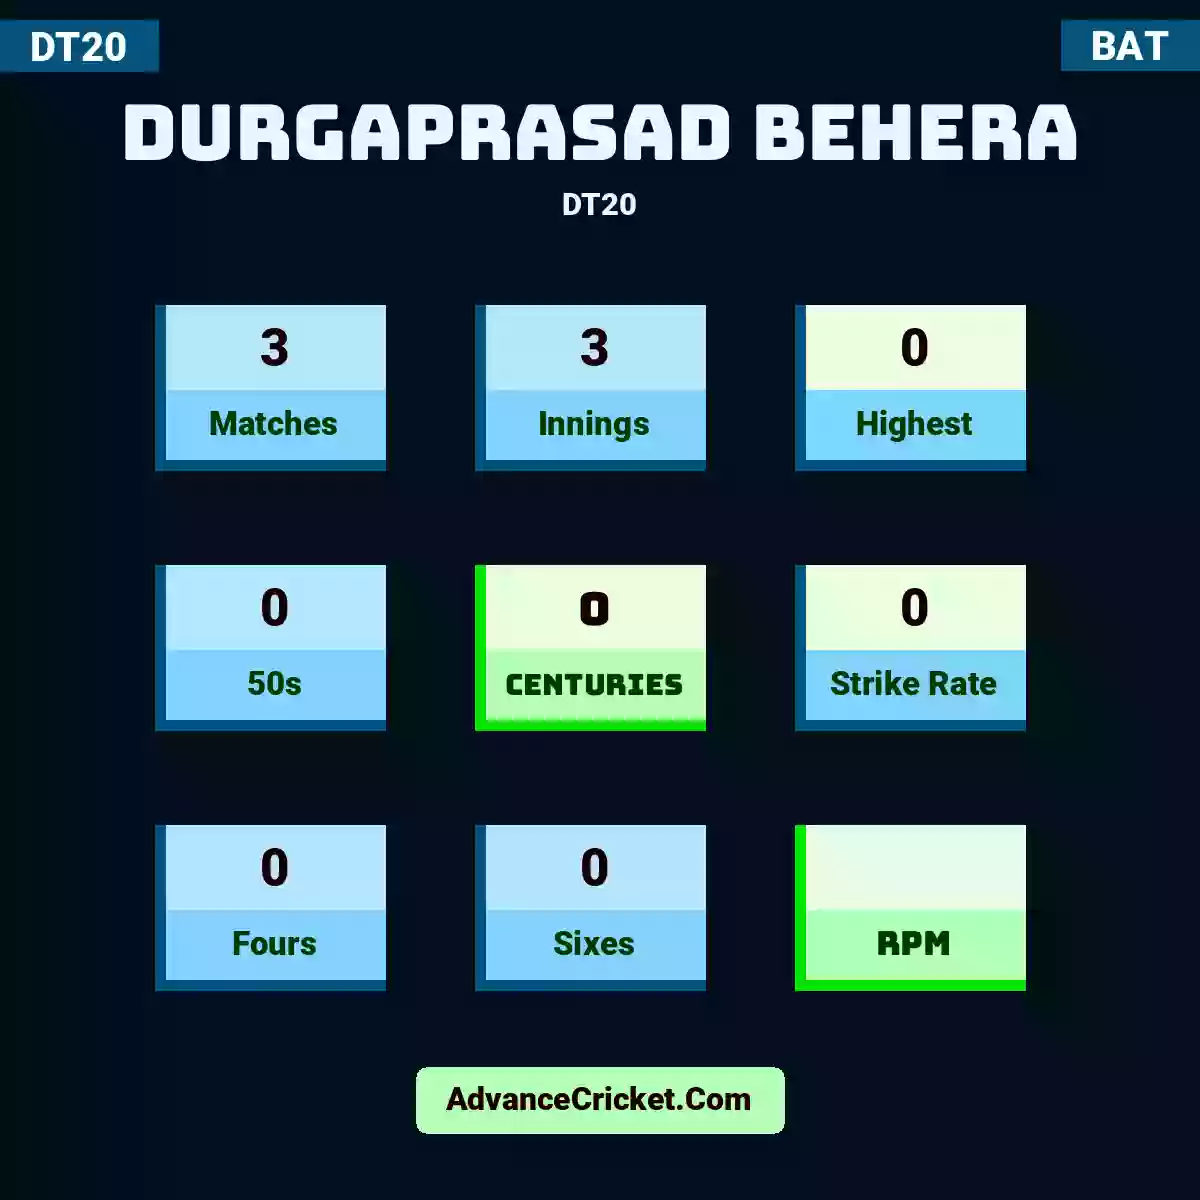 Durgaprasad Behera DT20 , Durgaprasad Behera played 3 matches, scored 0 runs as highest, 0 half-centuries, and 0 centuries, with a strike rate of 0. D.Behera hit 0 fours and 0 sixes.